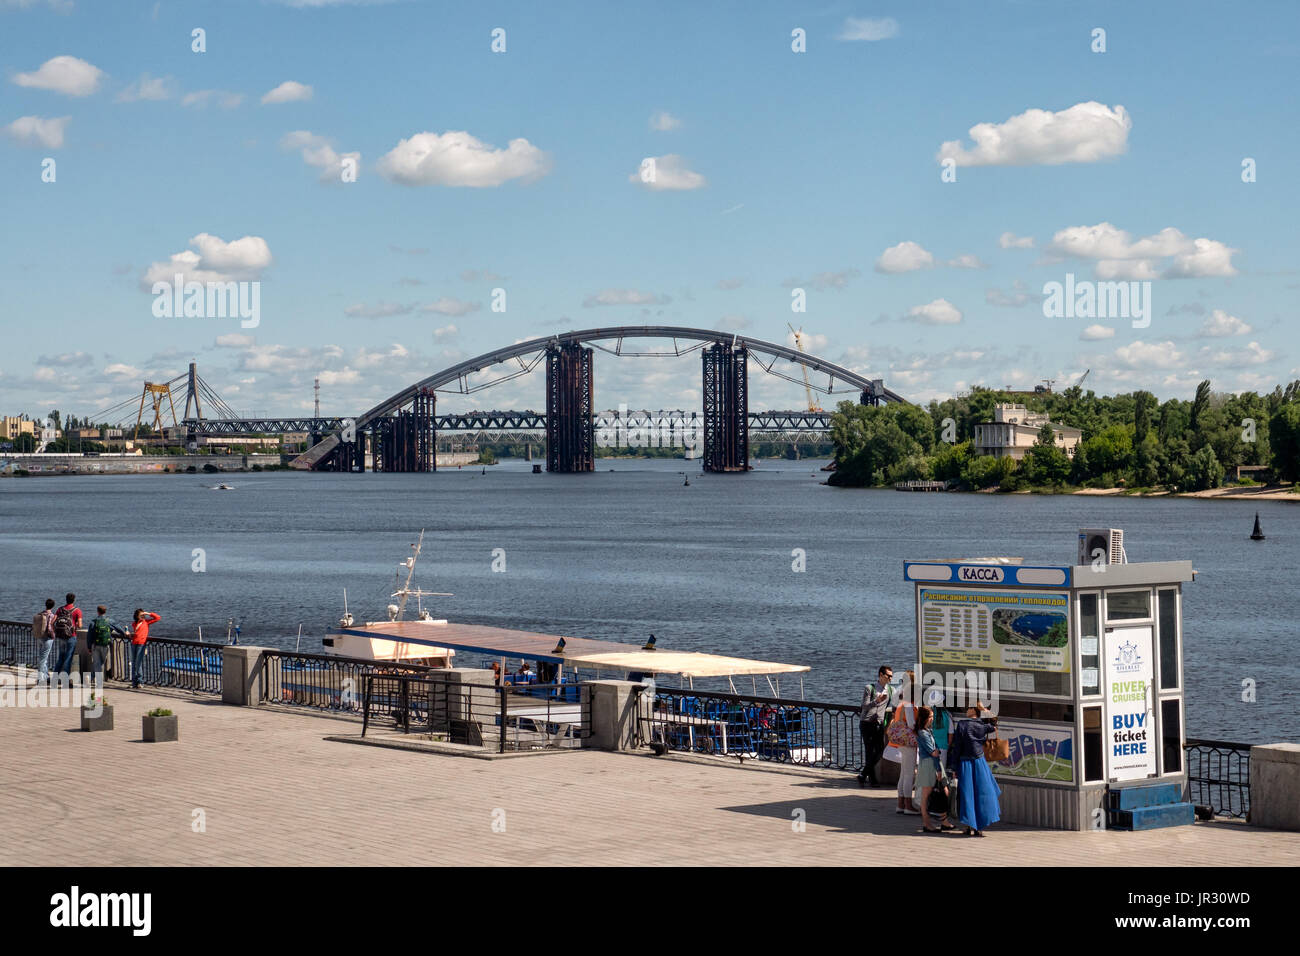 KYIV, UKRAINE - JUNE 12, 2016: Kiev River Port on the Dnieper (Dnipro) River with the Podilsko-Voskresensky Bridge in the background Stock Photo